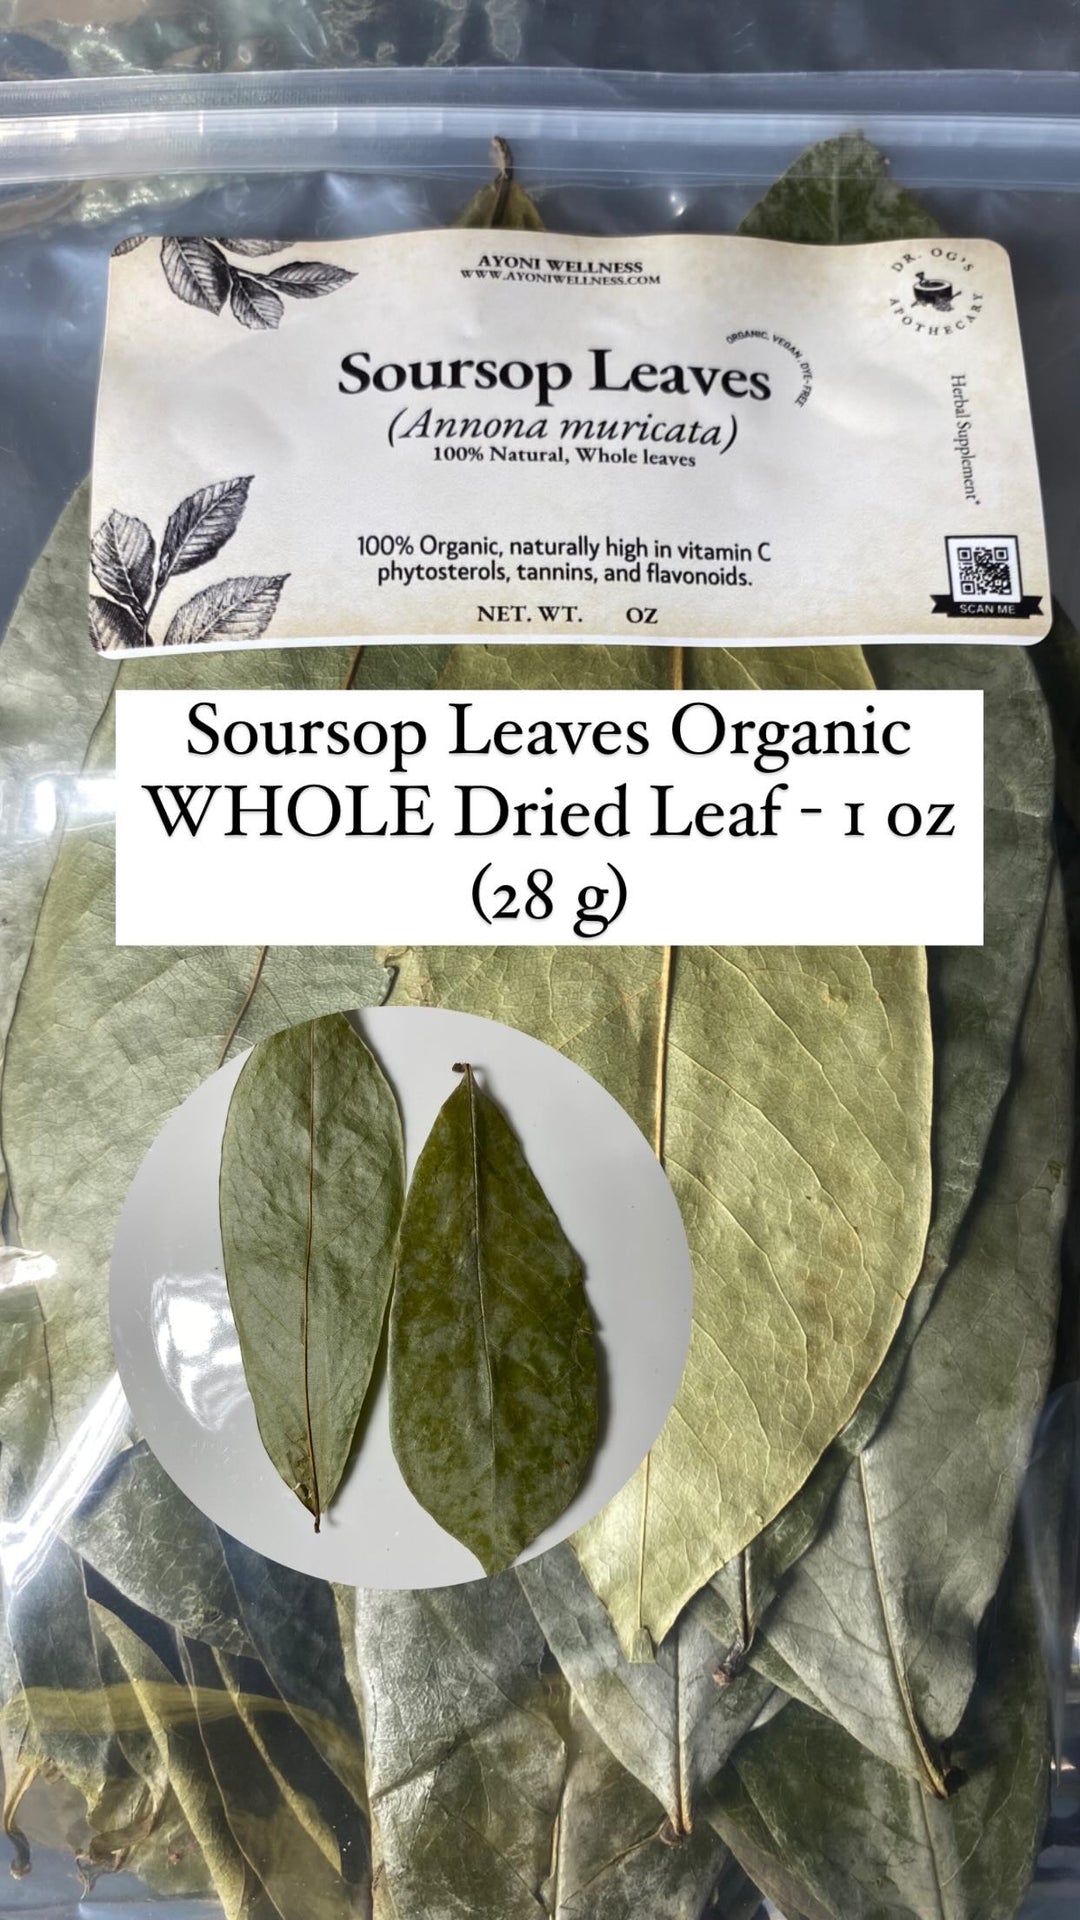 Organic Soursop Leaves, WHOLE Dried Leaf oz (28 g) – Ayoni Wellness